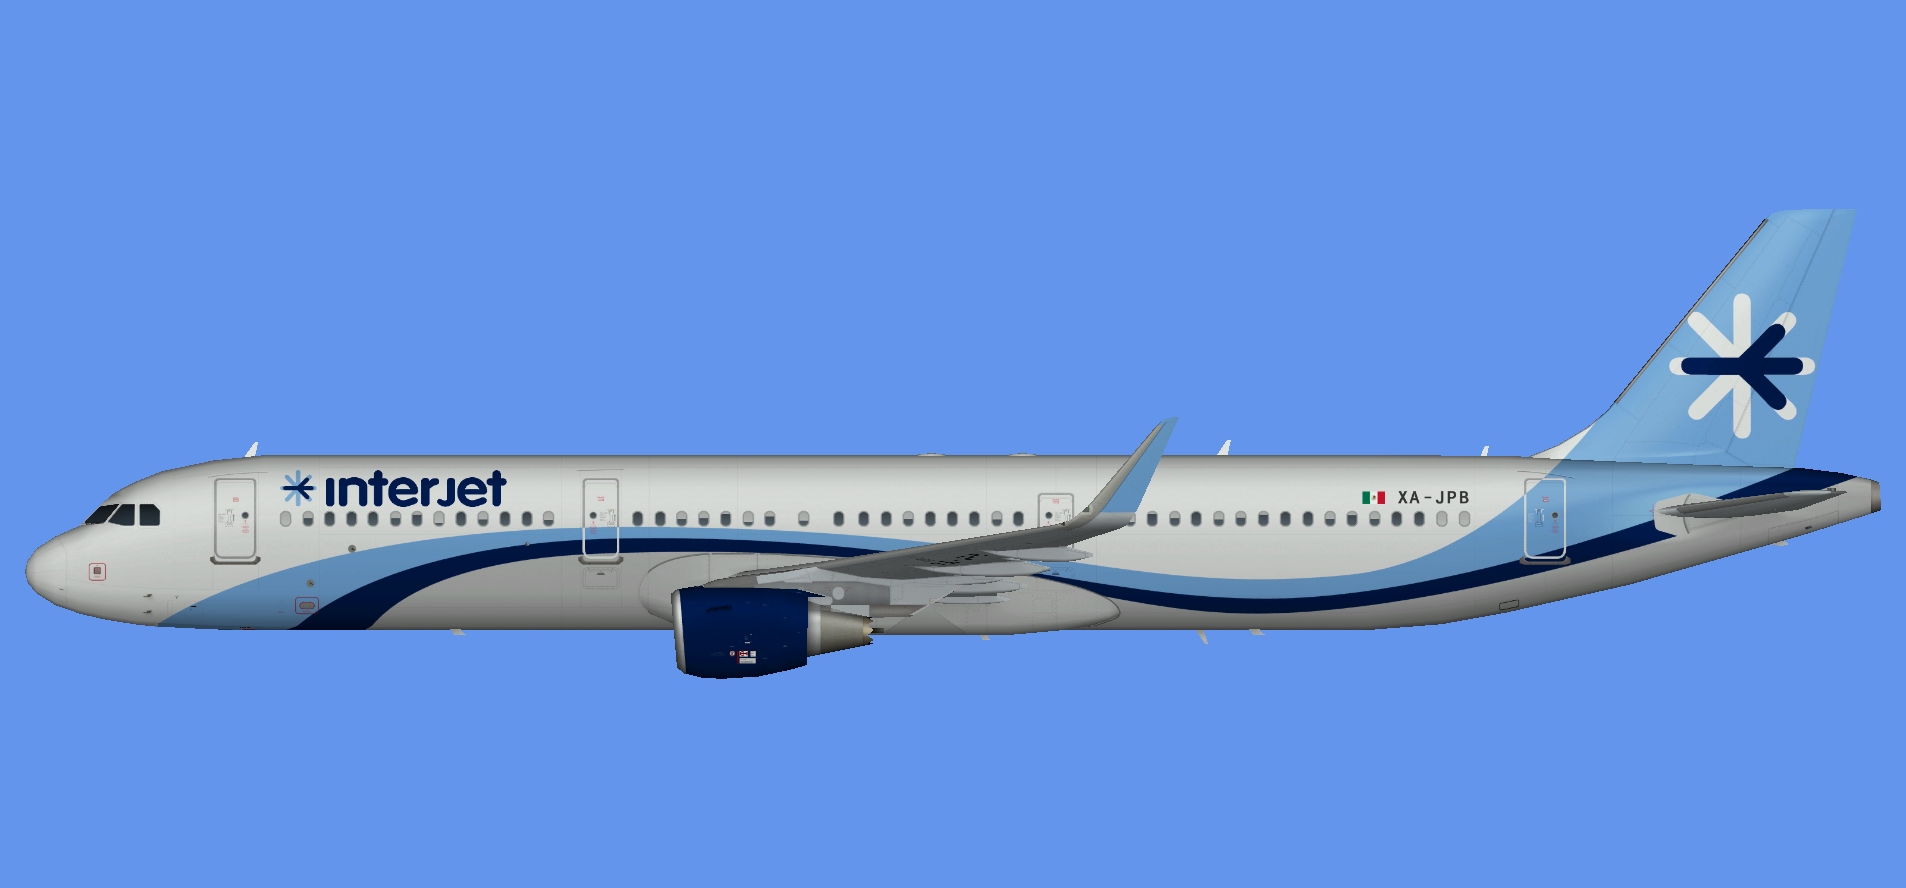 Interjet Airbus A321 sharklets